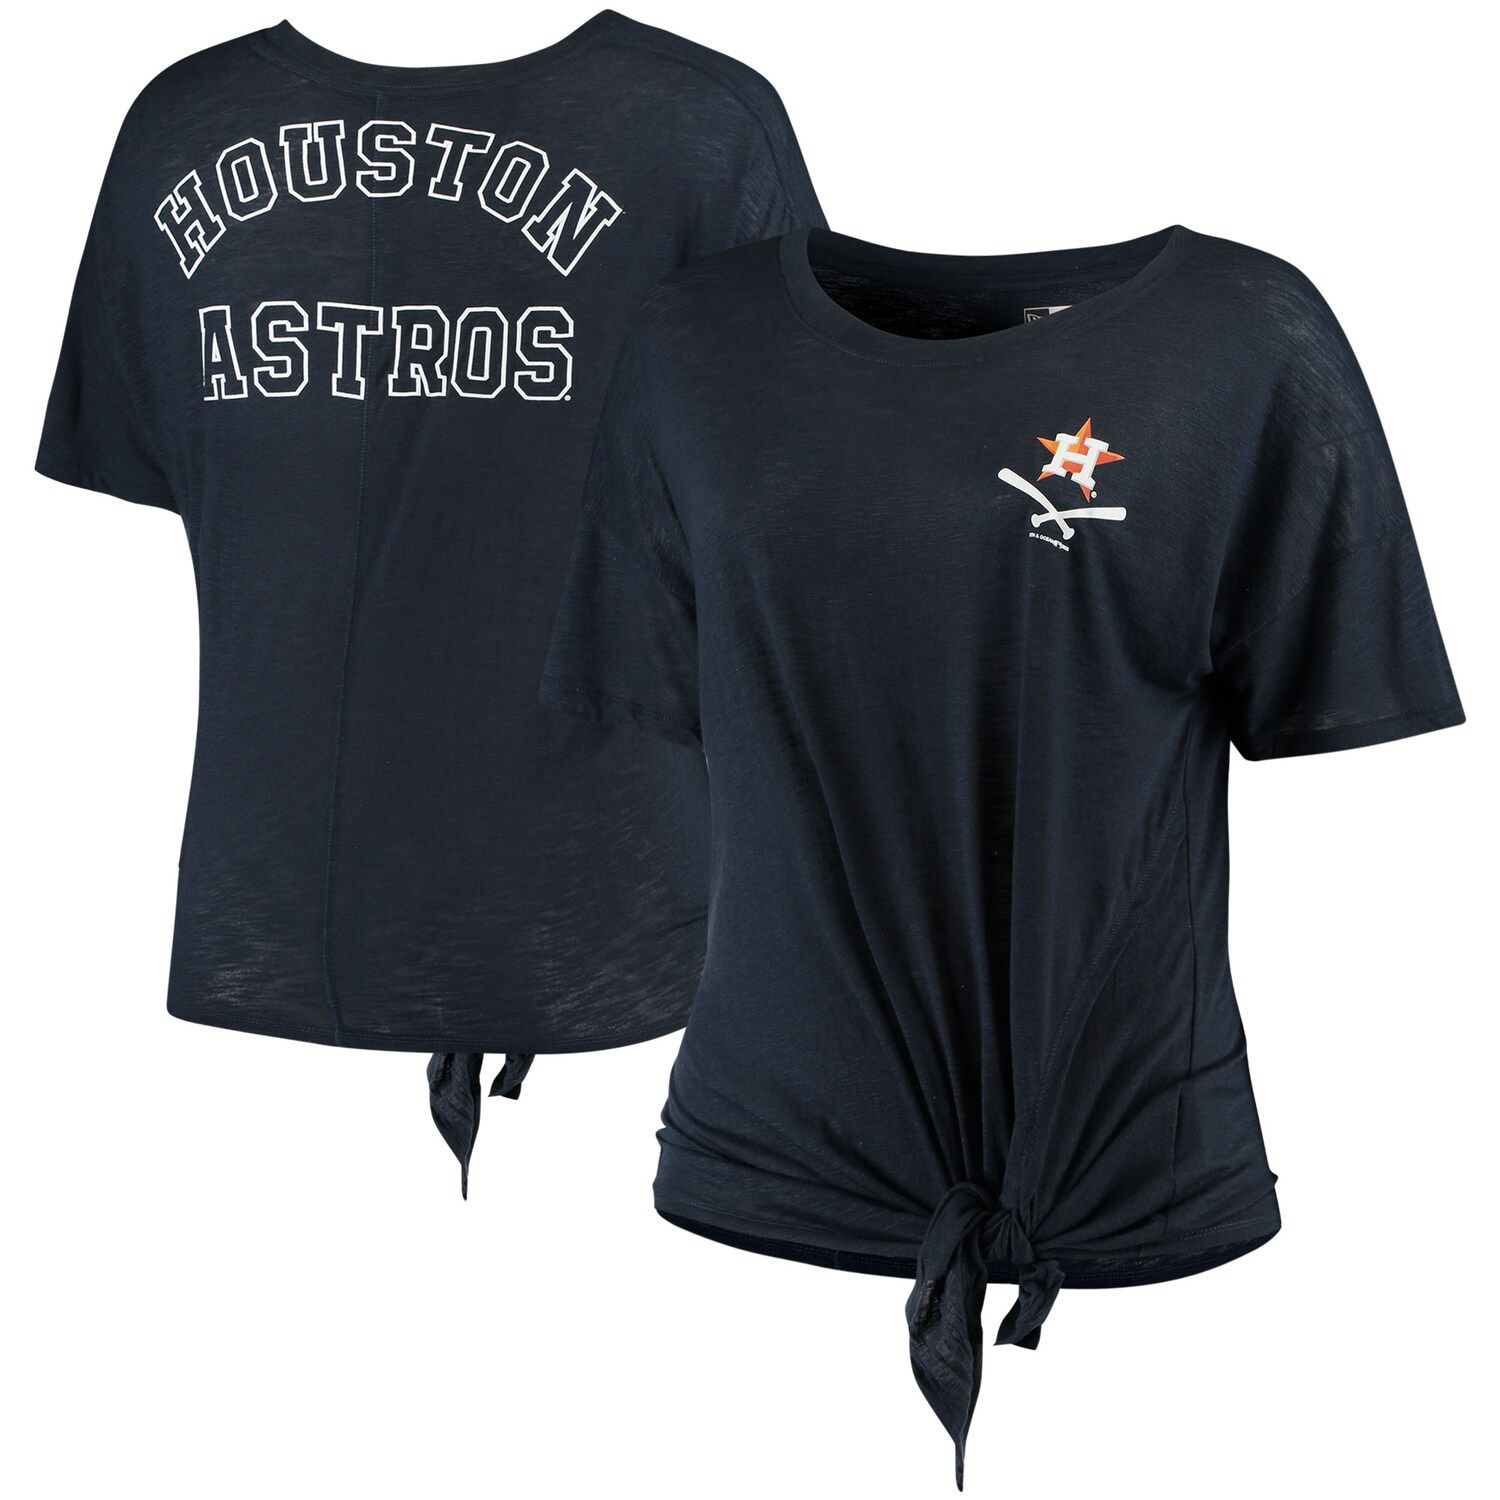 new astros shirt